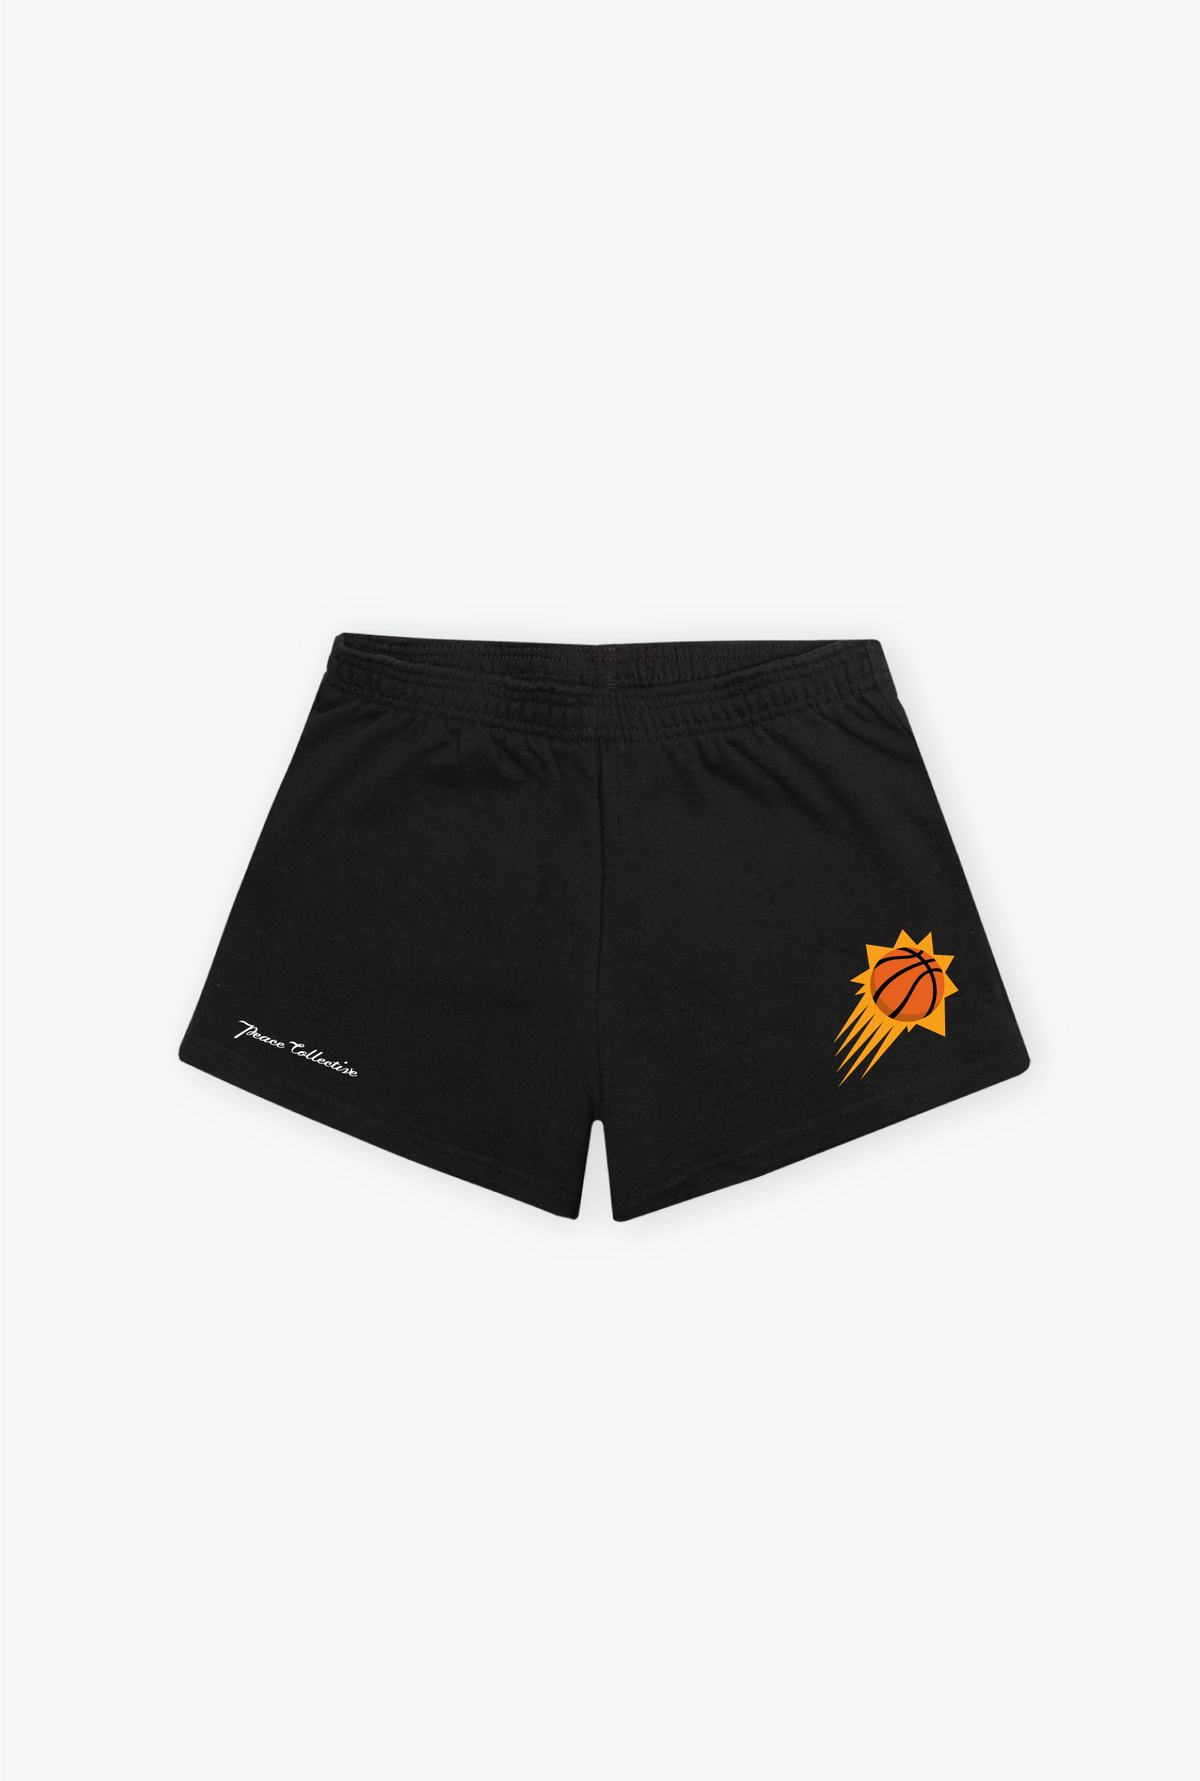 Phoenix Suns Women's Fleece Shorts - Black